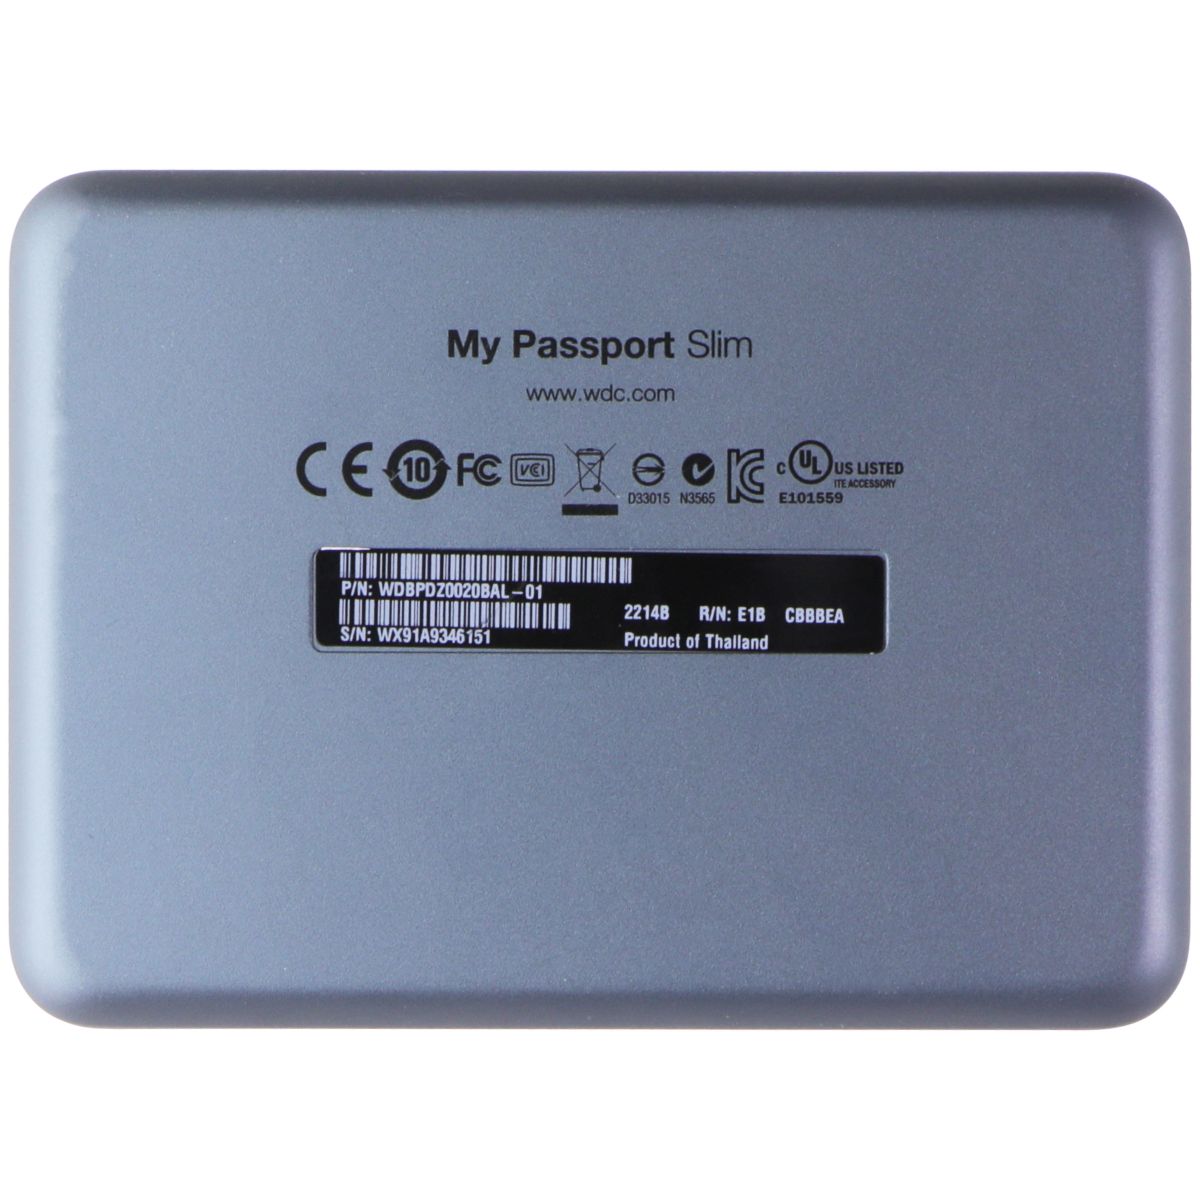 WD My Passport Slim (2TB) Portable Metal External Hard Drive USB 3.0 - Silver Digital Storage - External Hard Disk Drives, HDD Western Digital    - Simple Cell Bulk Wholesale Pricing - USA Seller